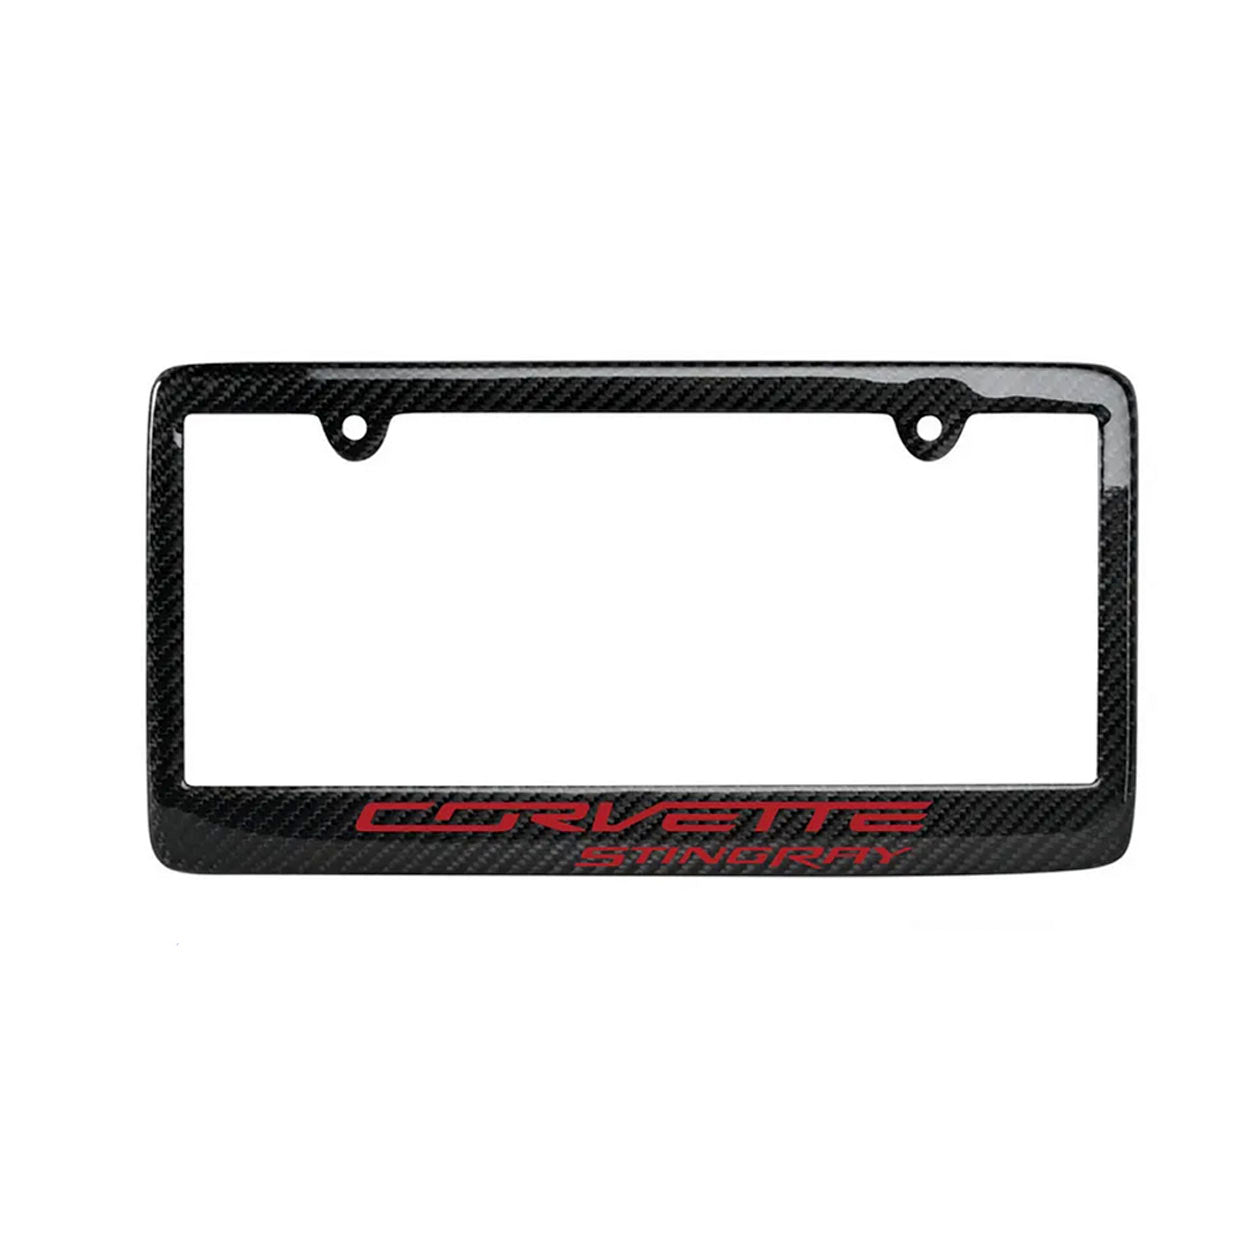 C7 Corvette License Plate Frame - Carbon Fiber W/Corvette Stingray Script